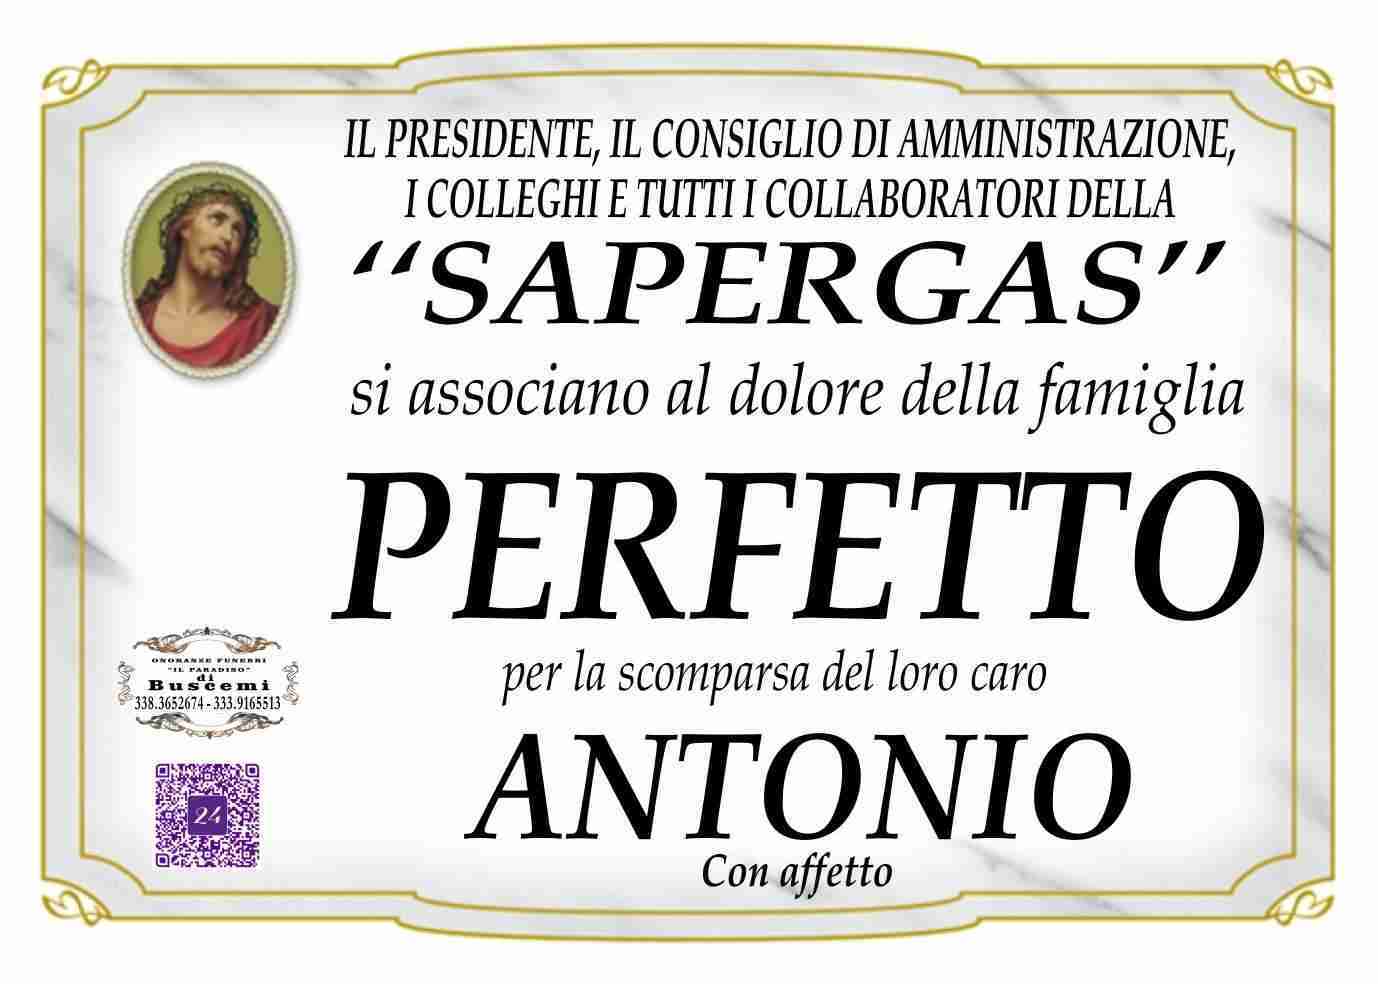 Antonio Perfetto